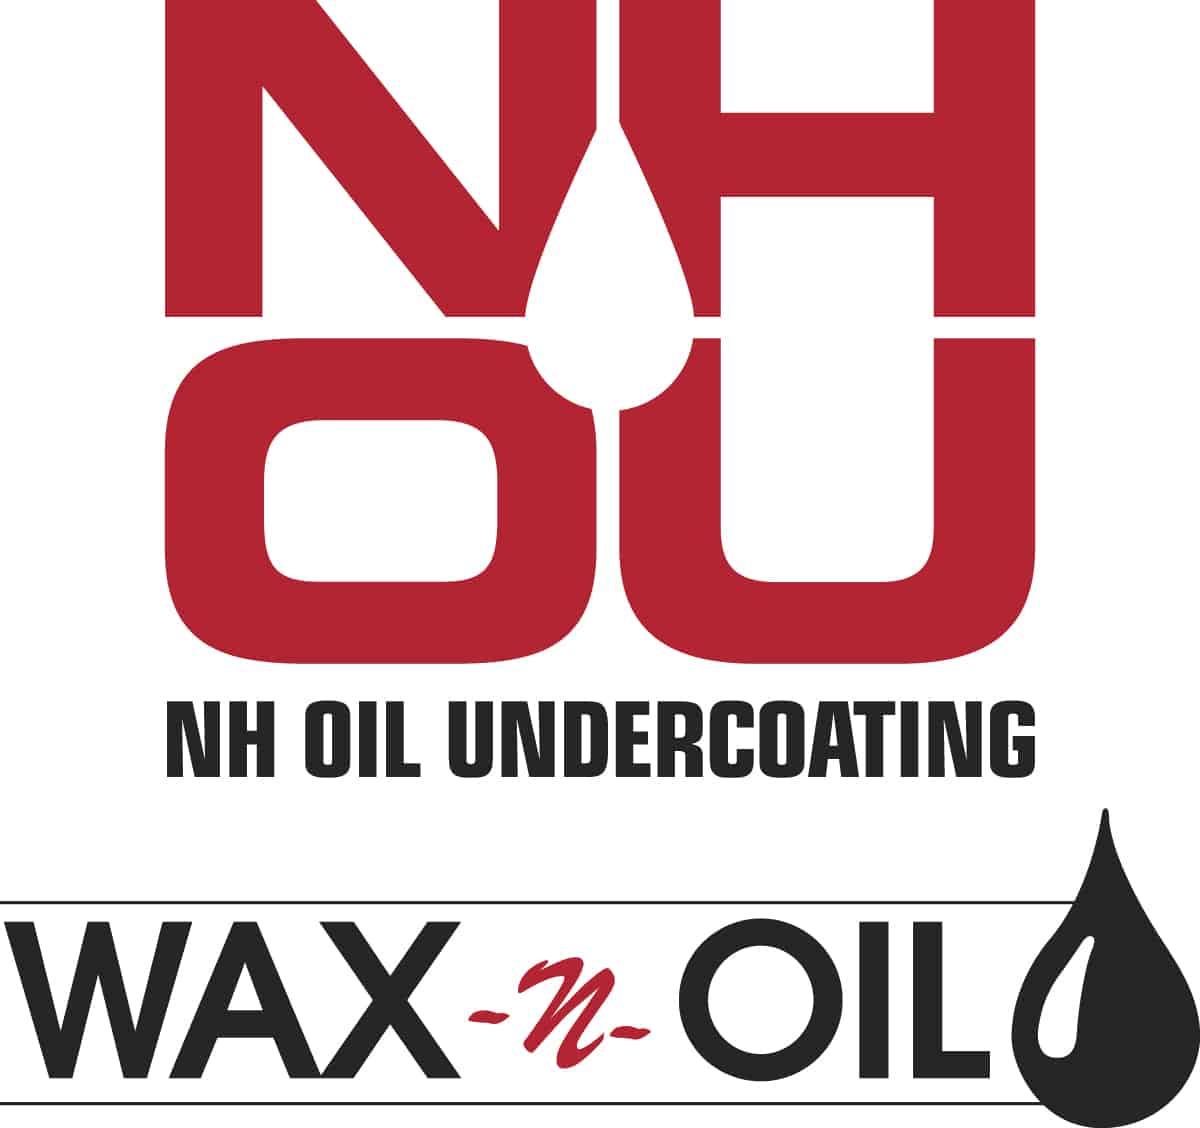 Wax Oil undercoating